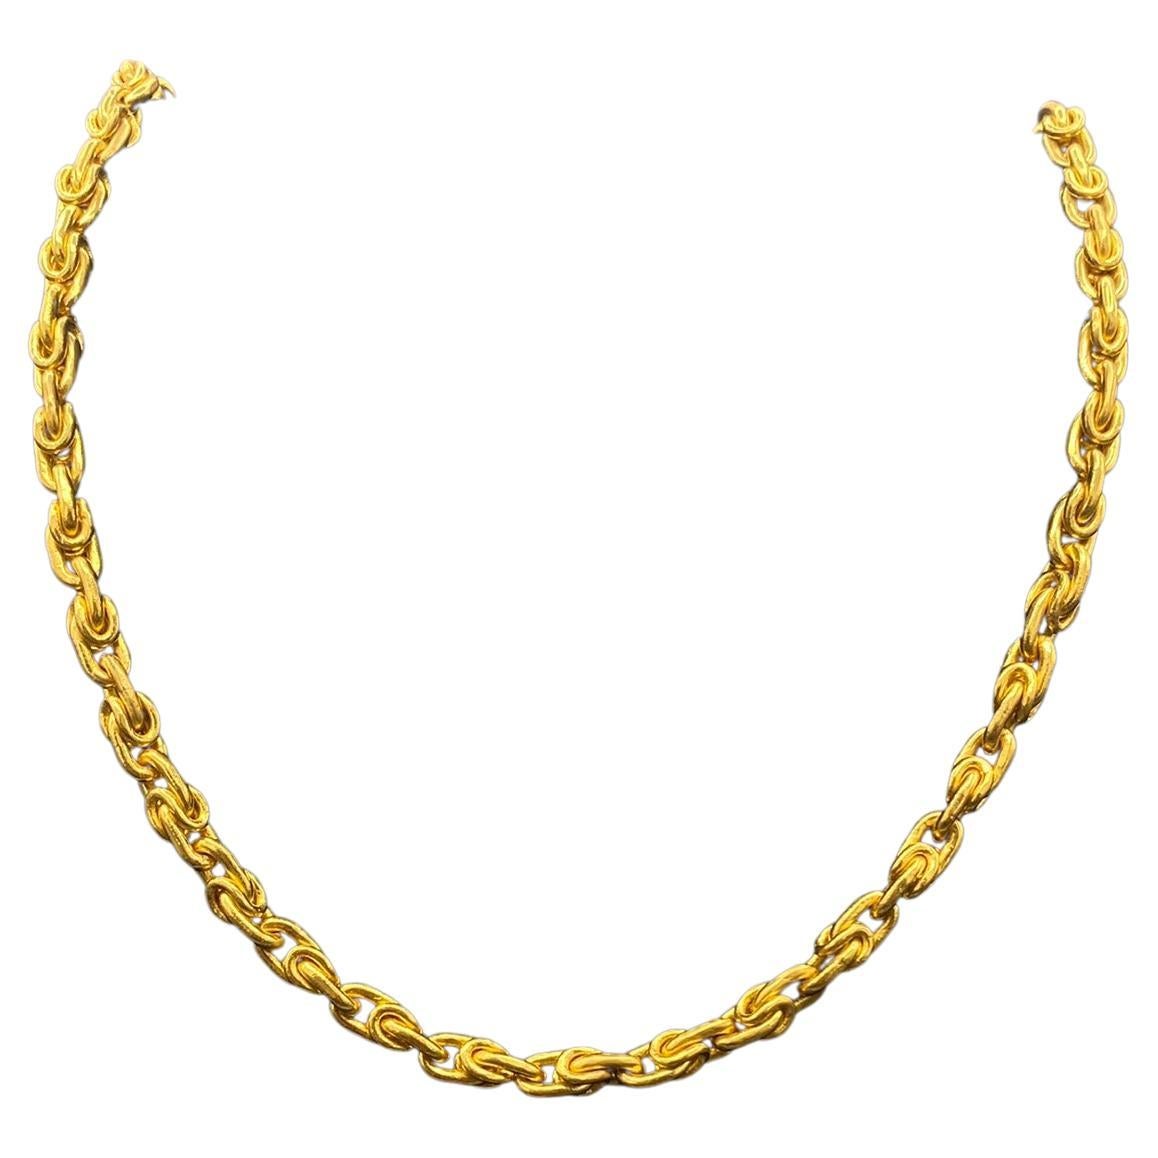 24k Gold Vik's Necklace